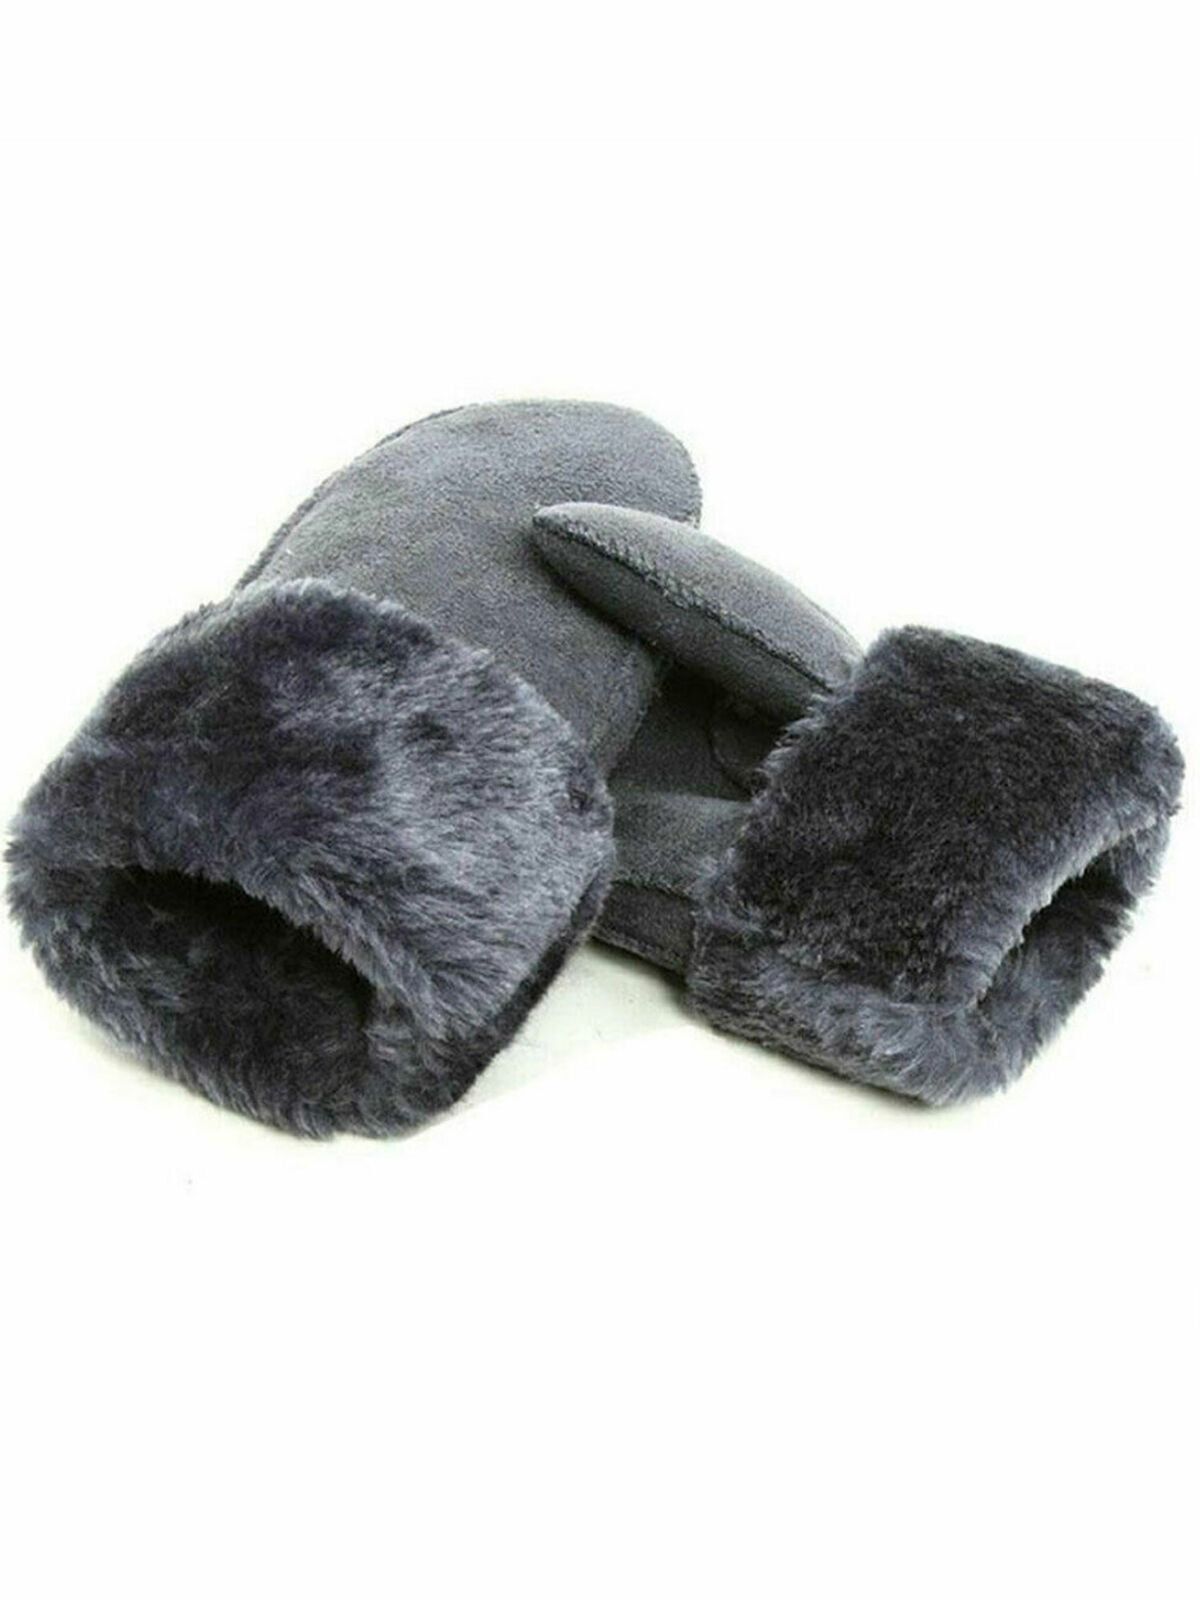 Women's Girl Cute Cloth Mittens Winter Warm Fleece Gloves Fur Trim Frosted New